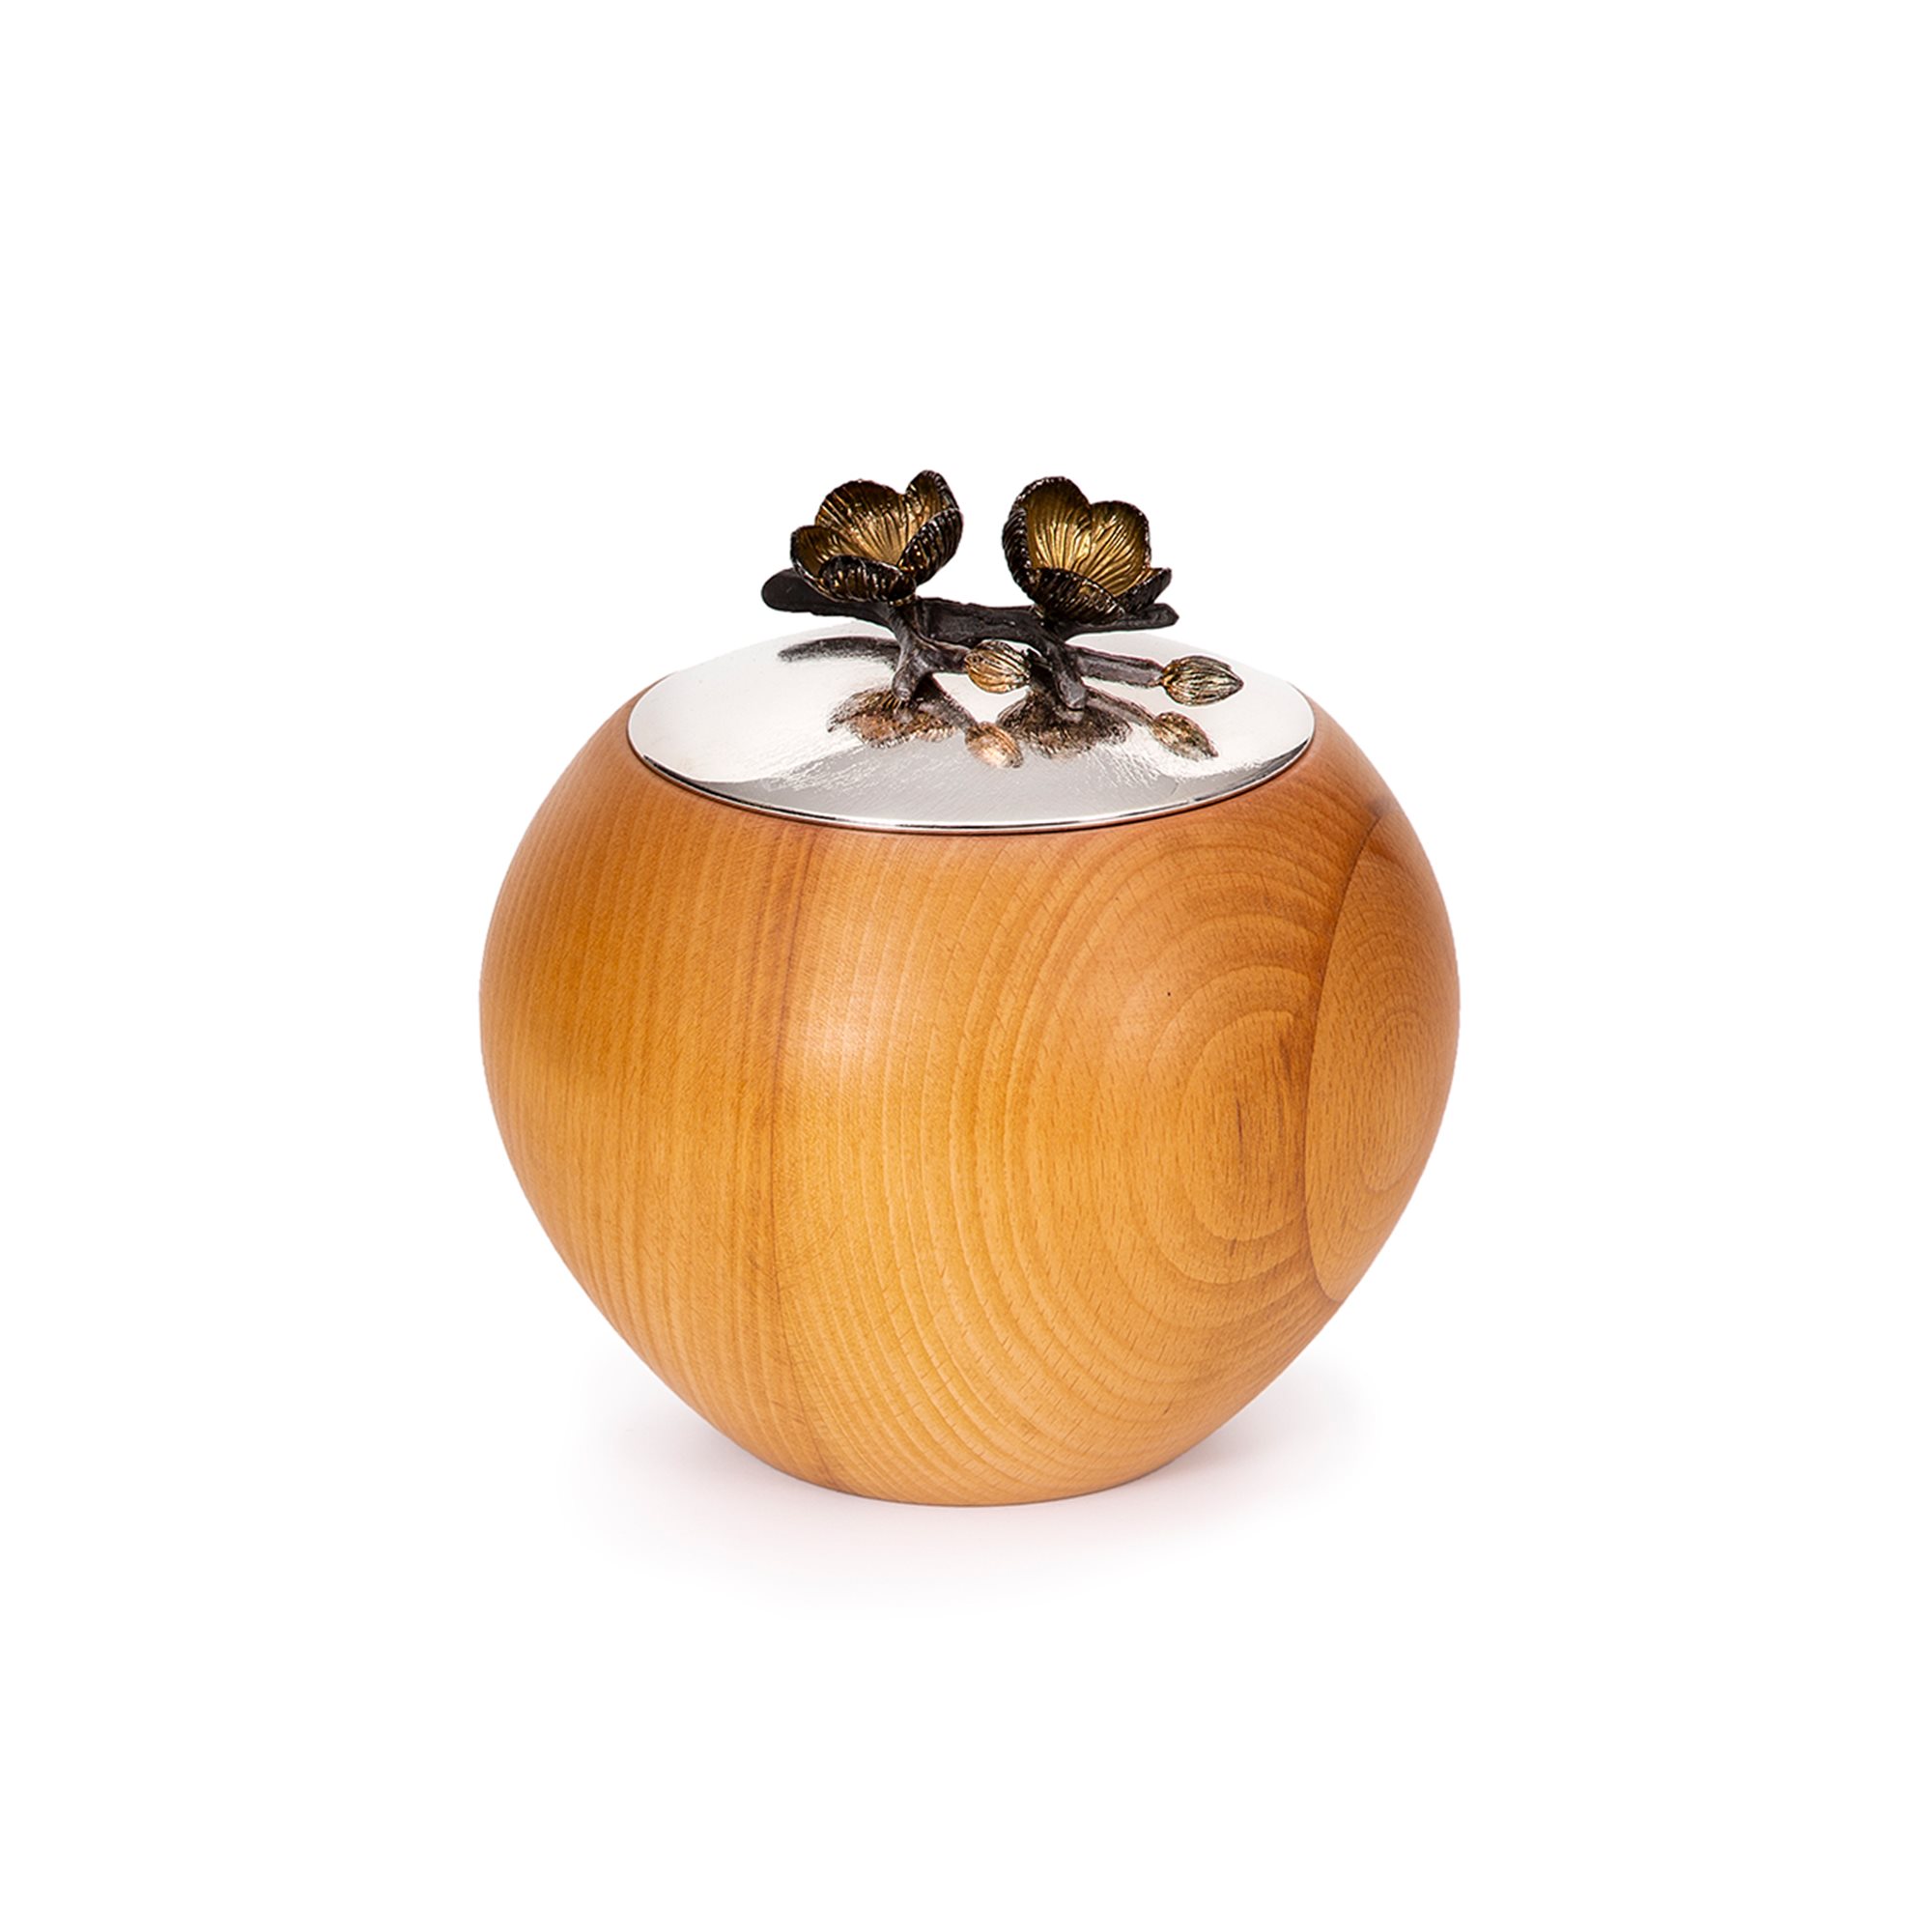 Marina Wood Bowl with Lid (Size B2)